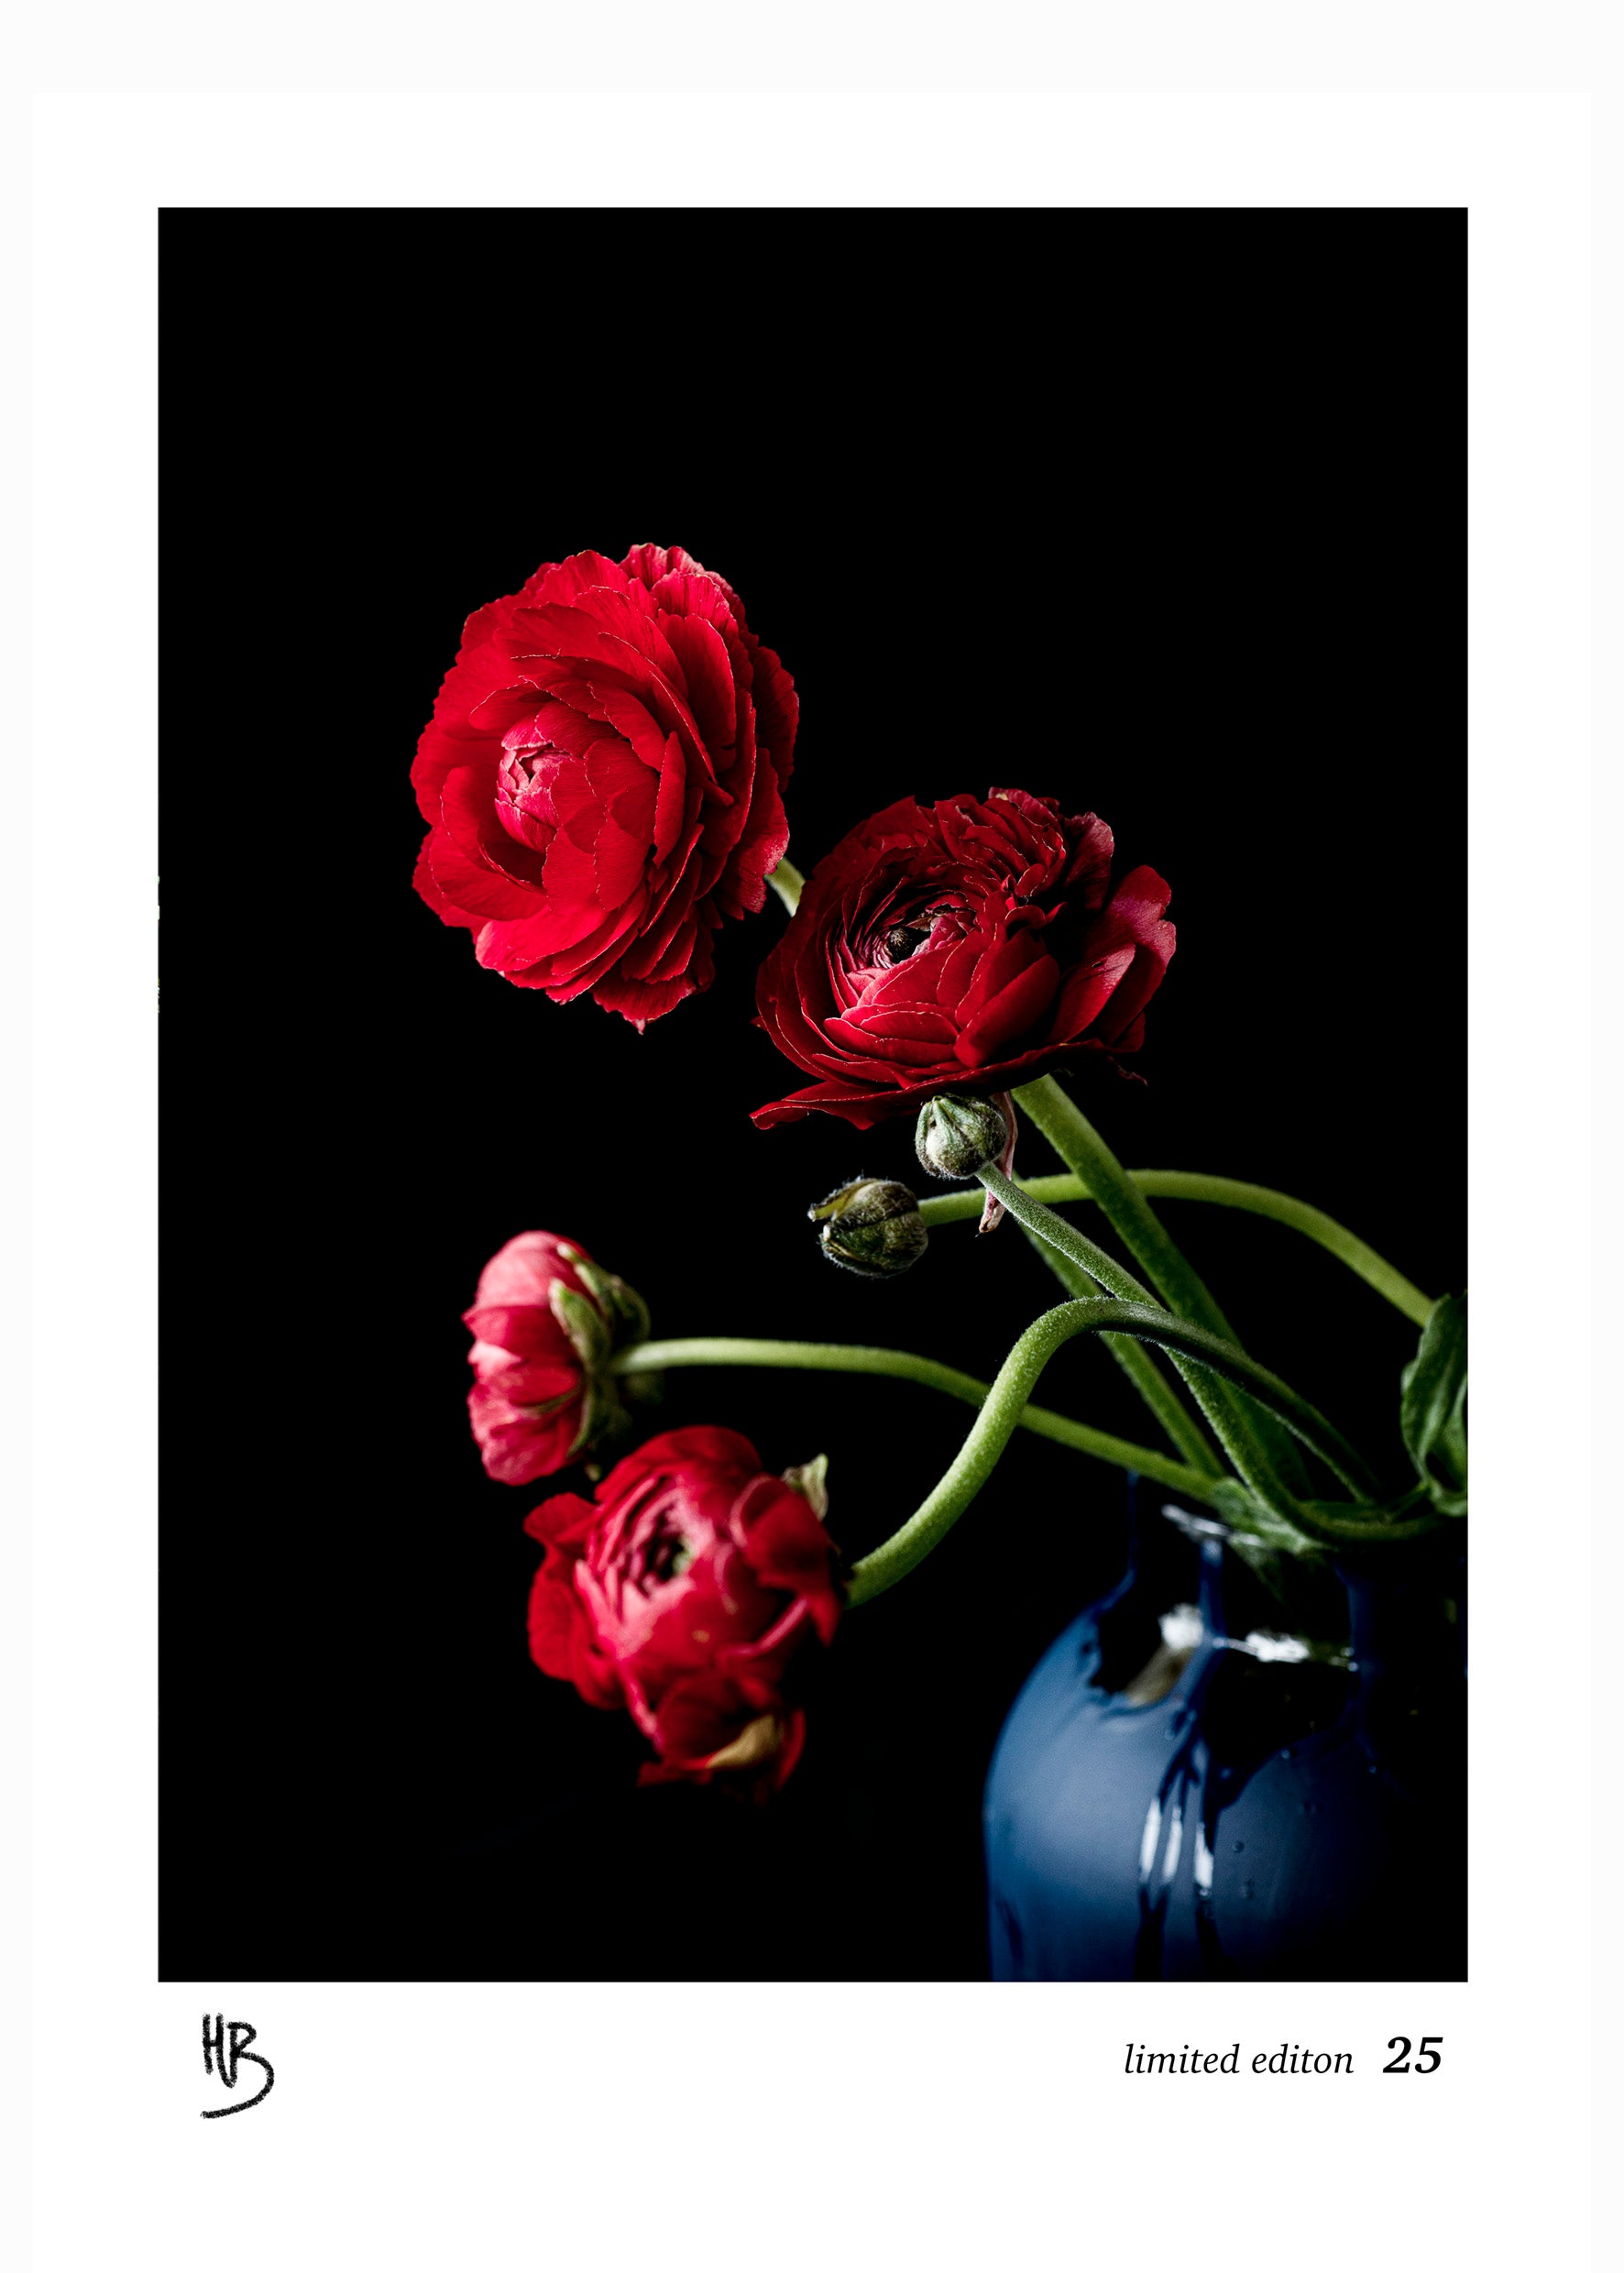 "linen" "linen tea towel" "art" "edition" "artist edition" "red" "Floral" "Flowers" "ranuculas" "red flowers" "limited edition" "Helen Bankers" "Artist" "Photographer"